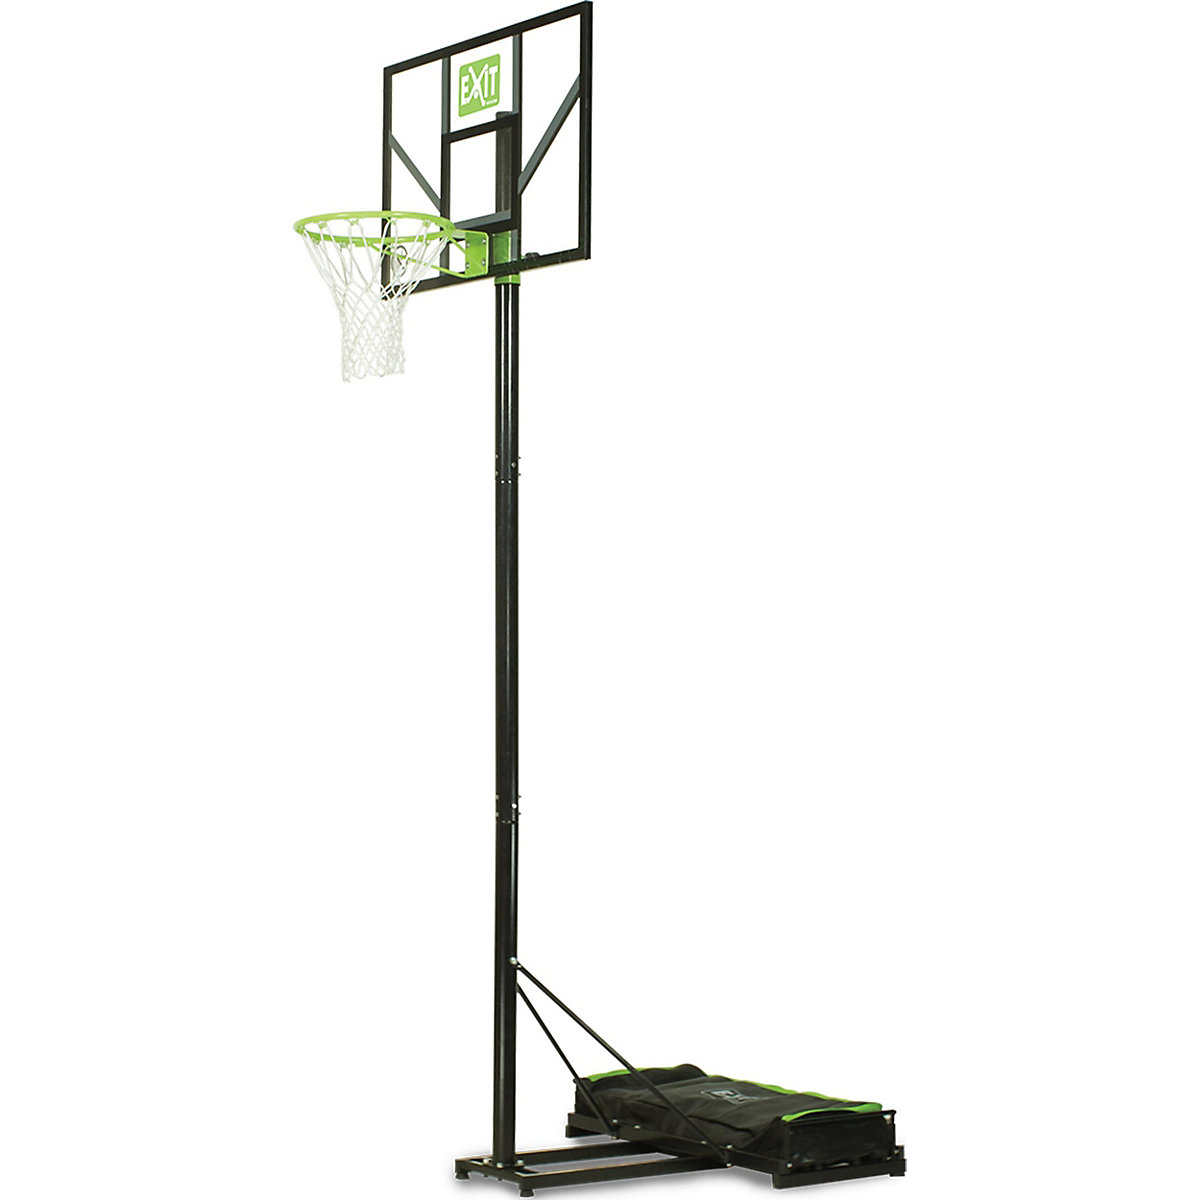 Exit Toys EXIT Comet versetzbarer Basketballkorb grün/schwarz